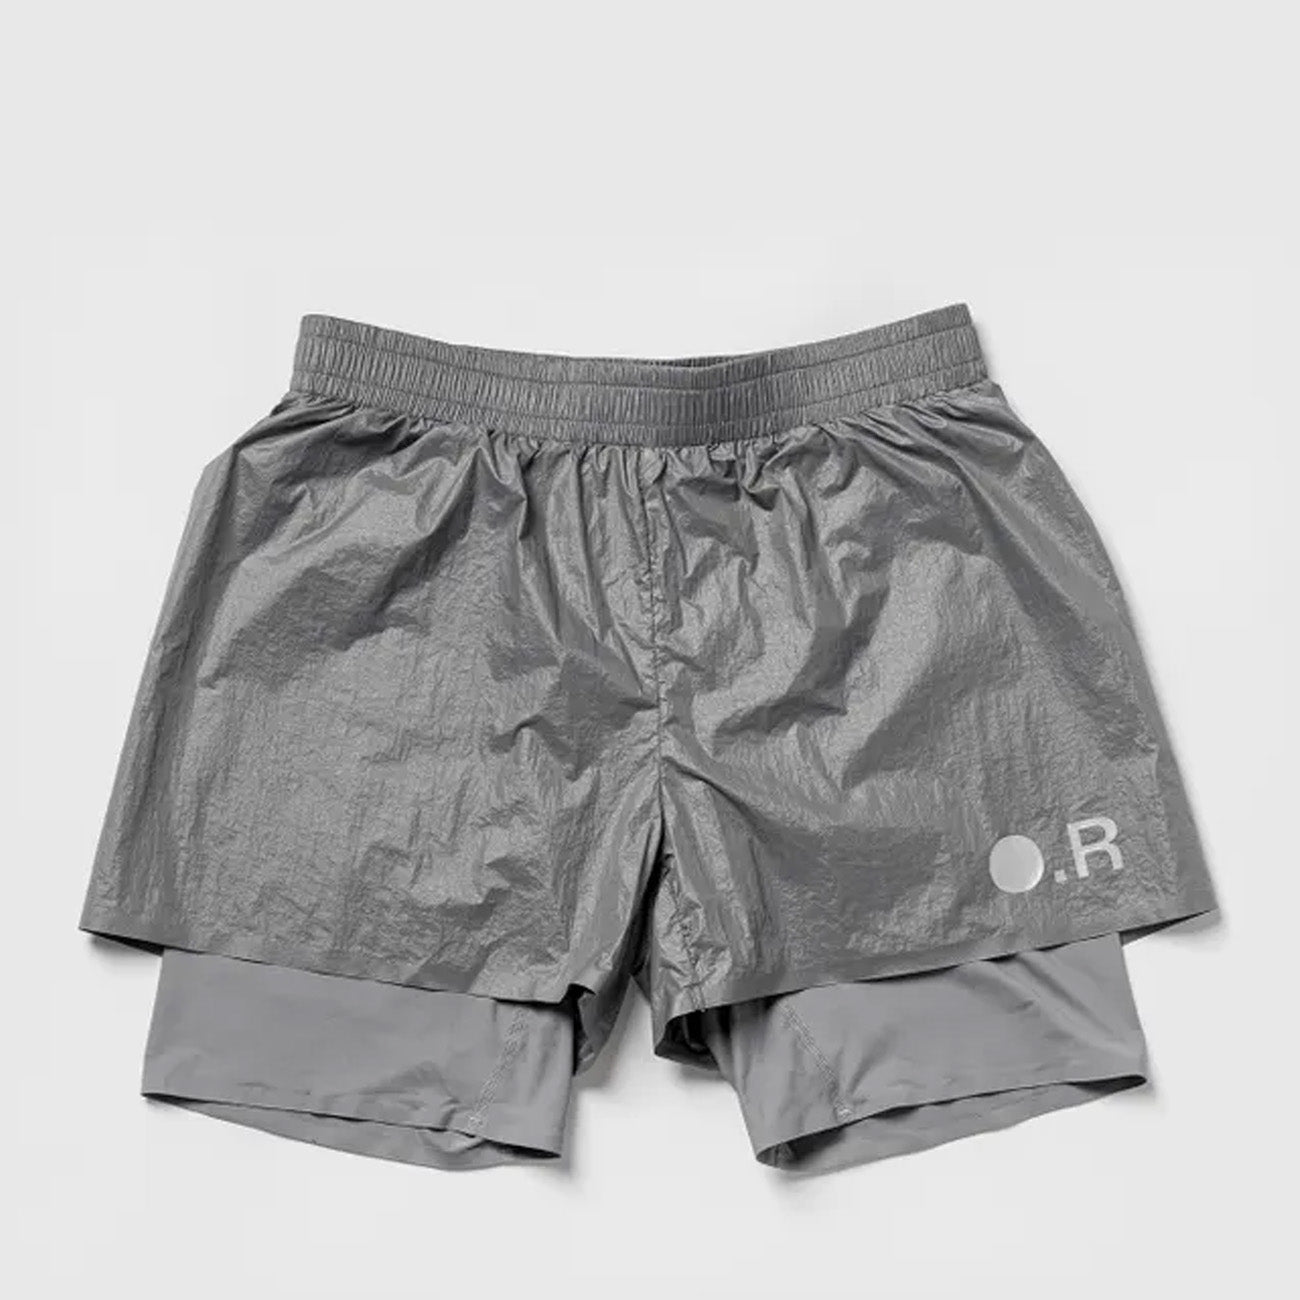 Optimistic Runners Glossy Nylon Shorts Dark Grey